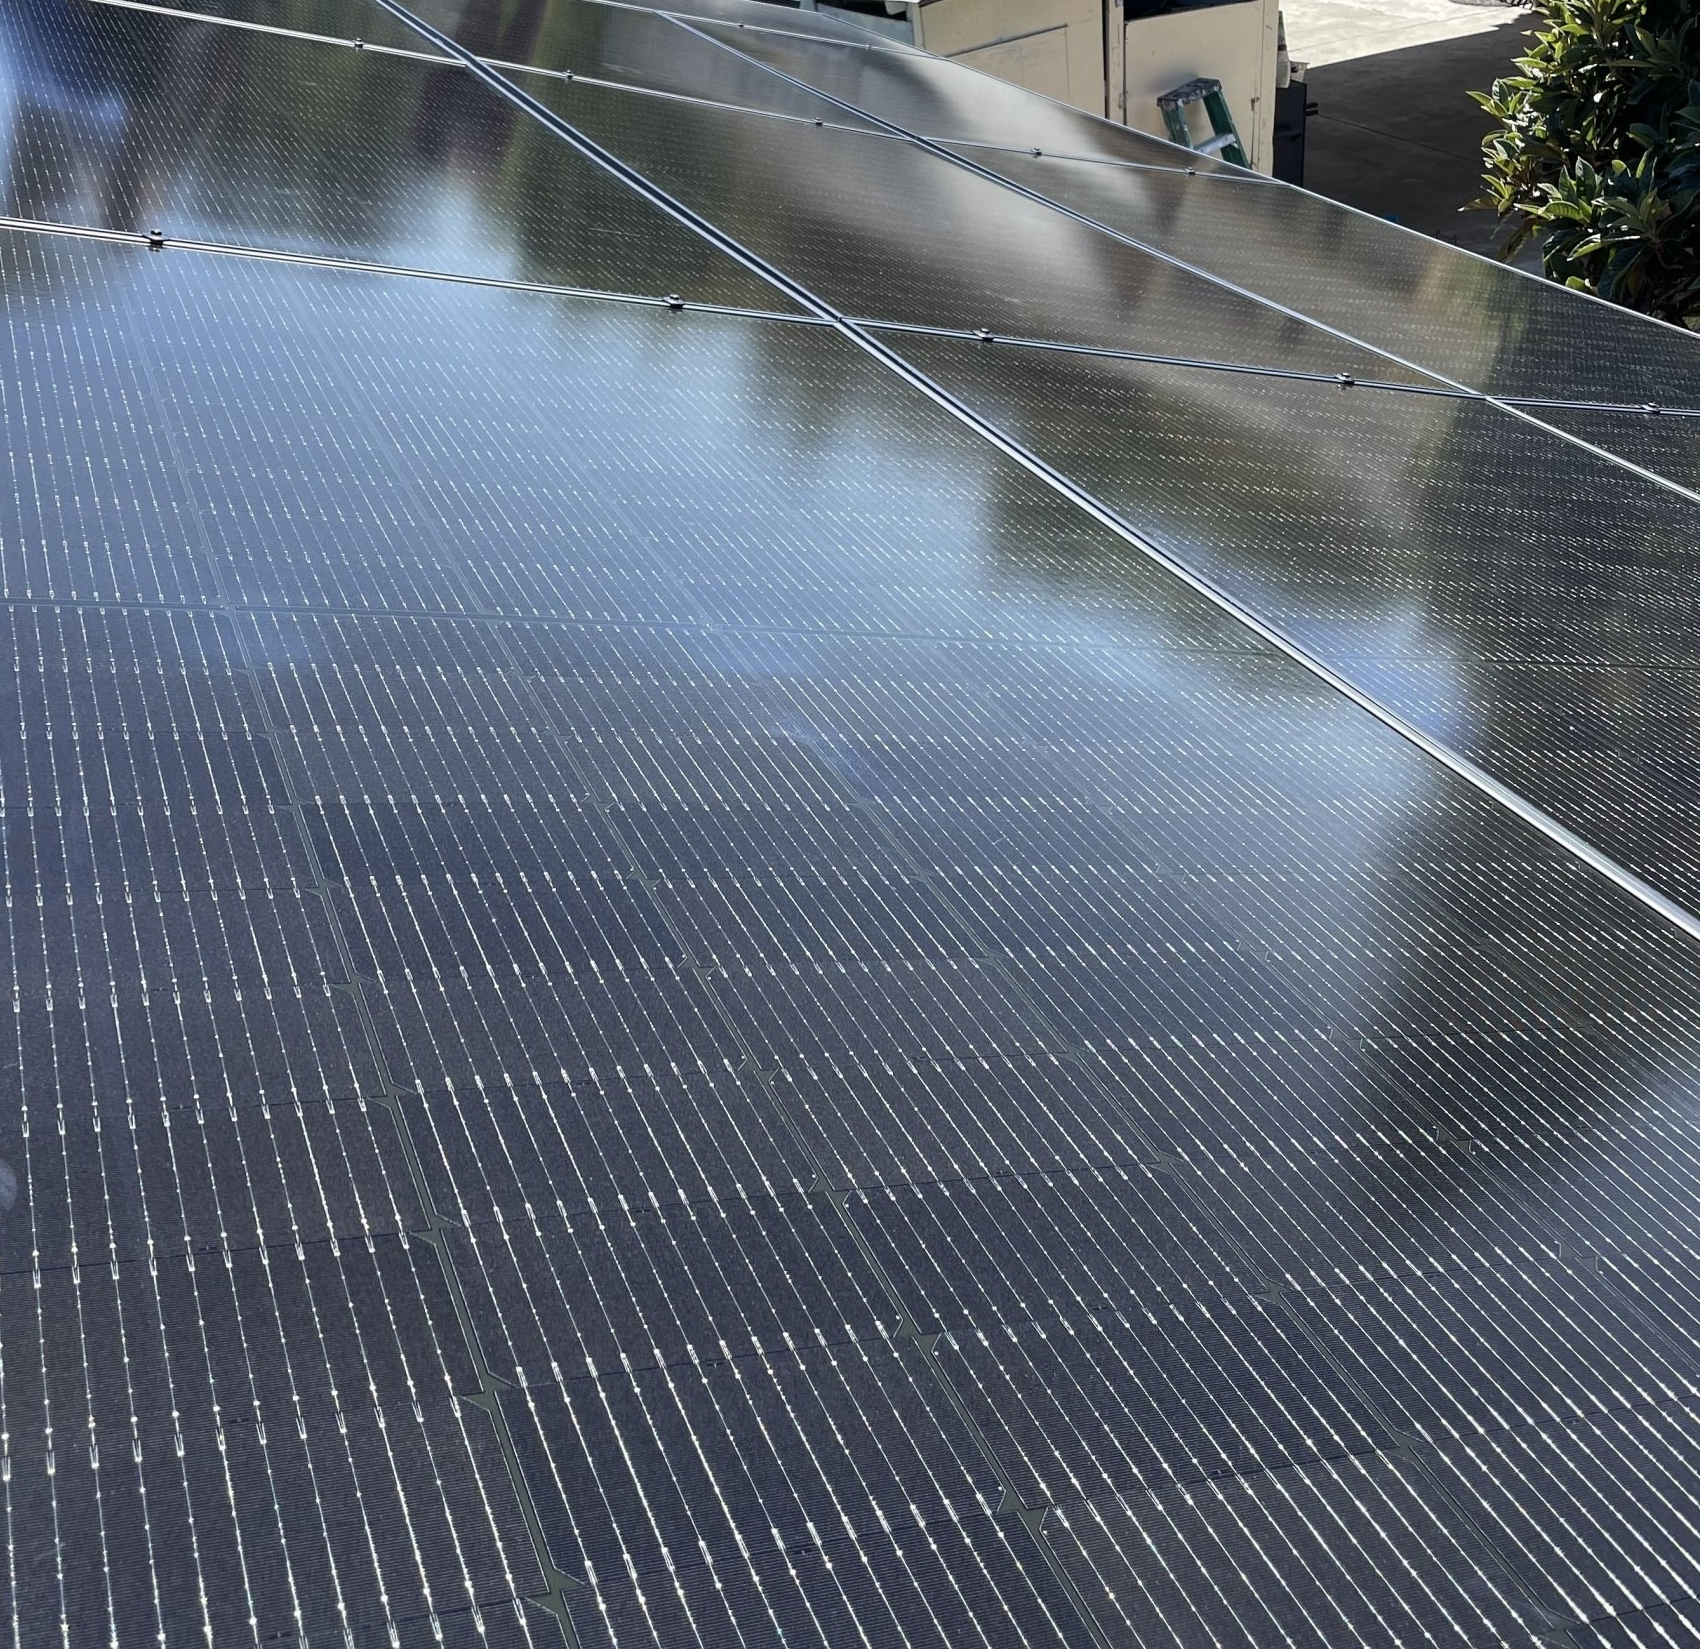 405w QCell Solar Panels
